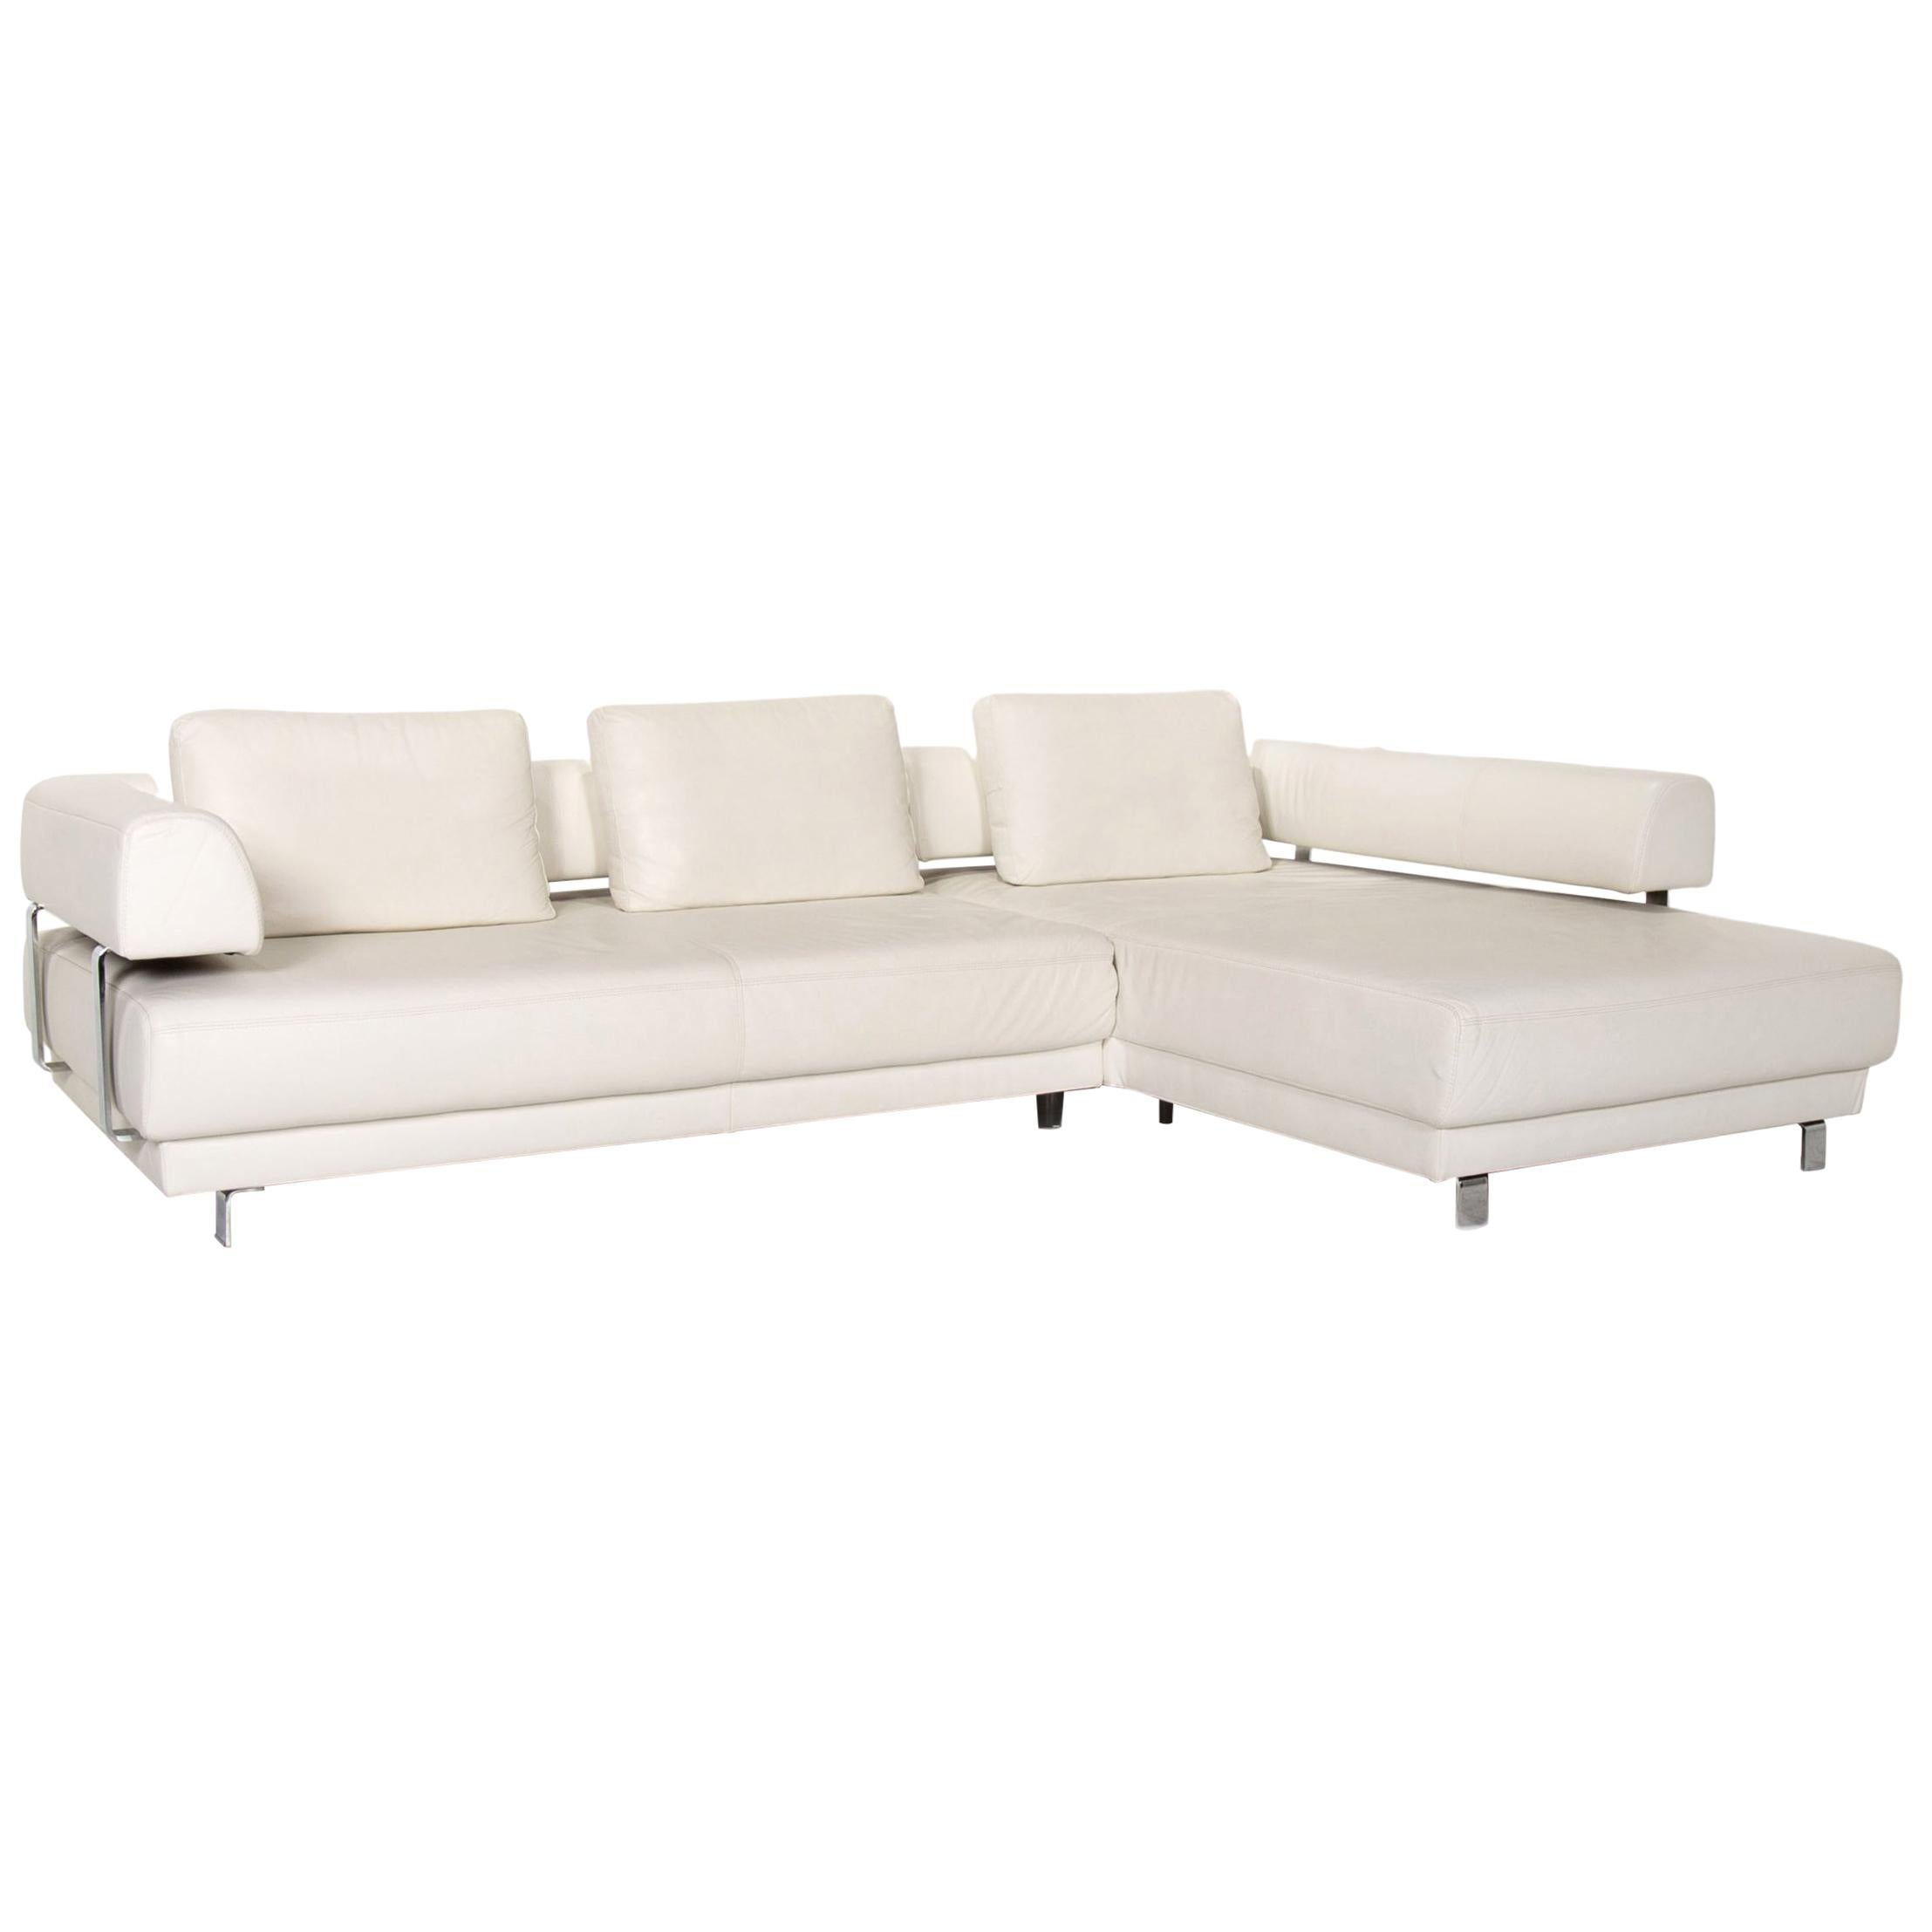 Ewald Schillig Leather Corner Sofa White Sofa Couch